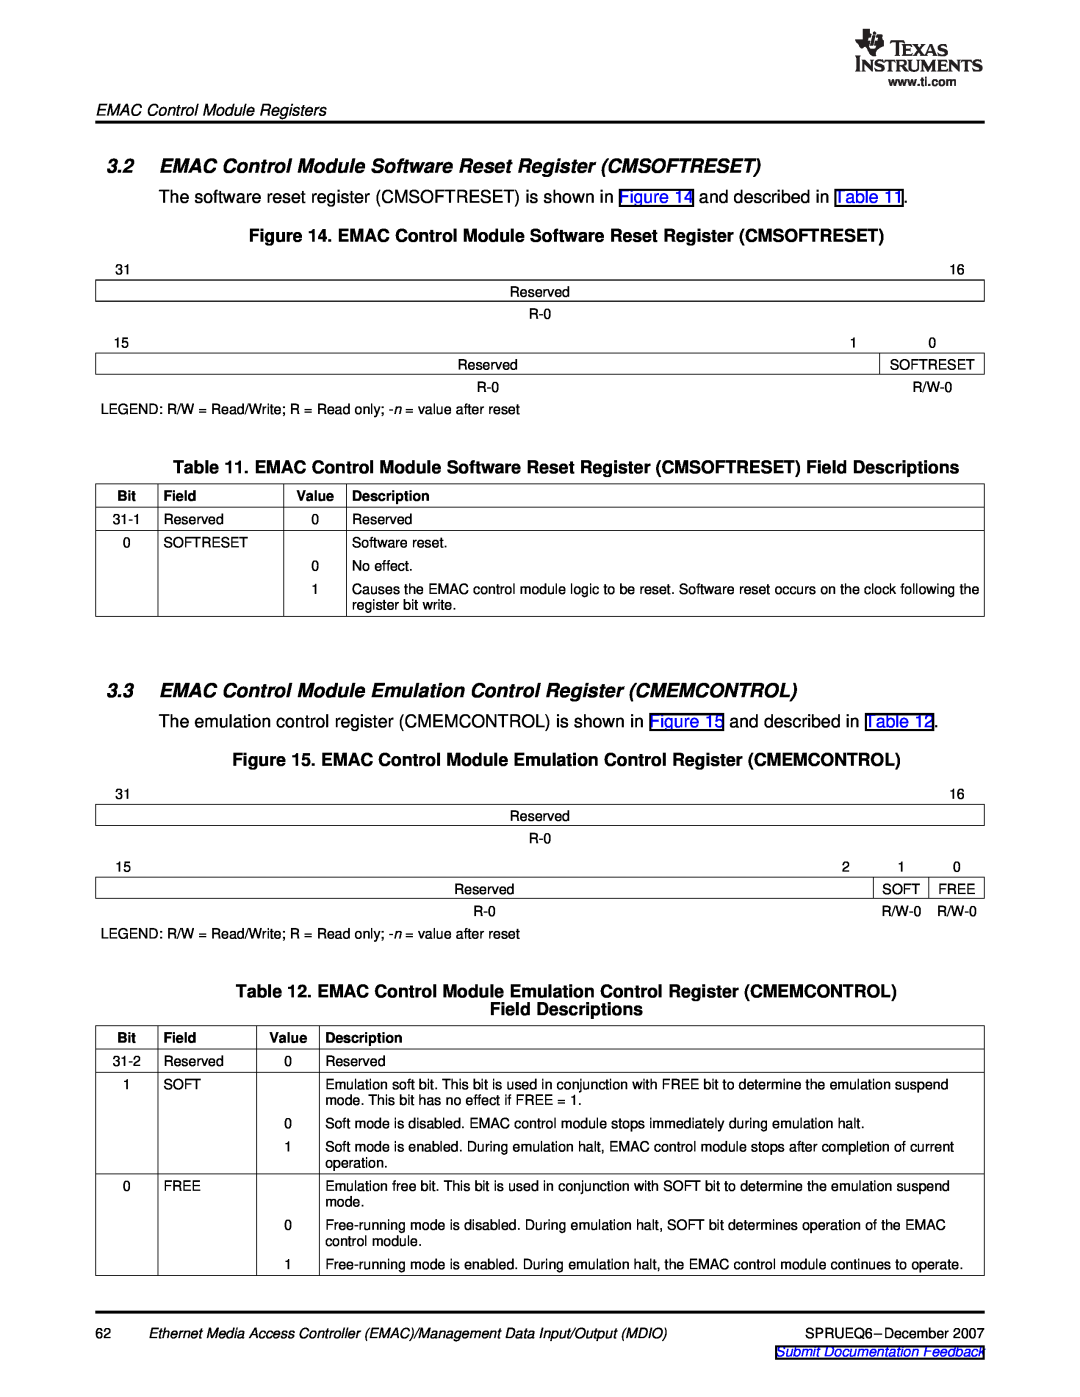 Texas Instruments TMS320DM646x manual EMAC Control Module Software Reset Register CMSOFTRESET, Field Descriptions 